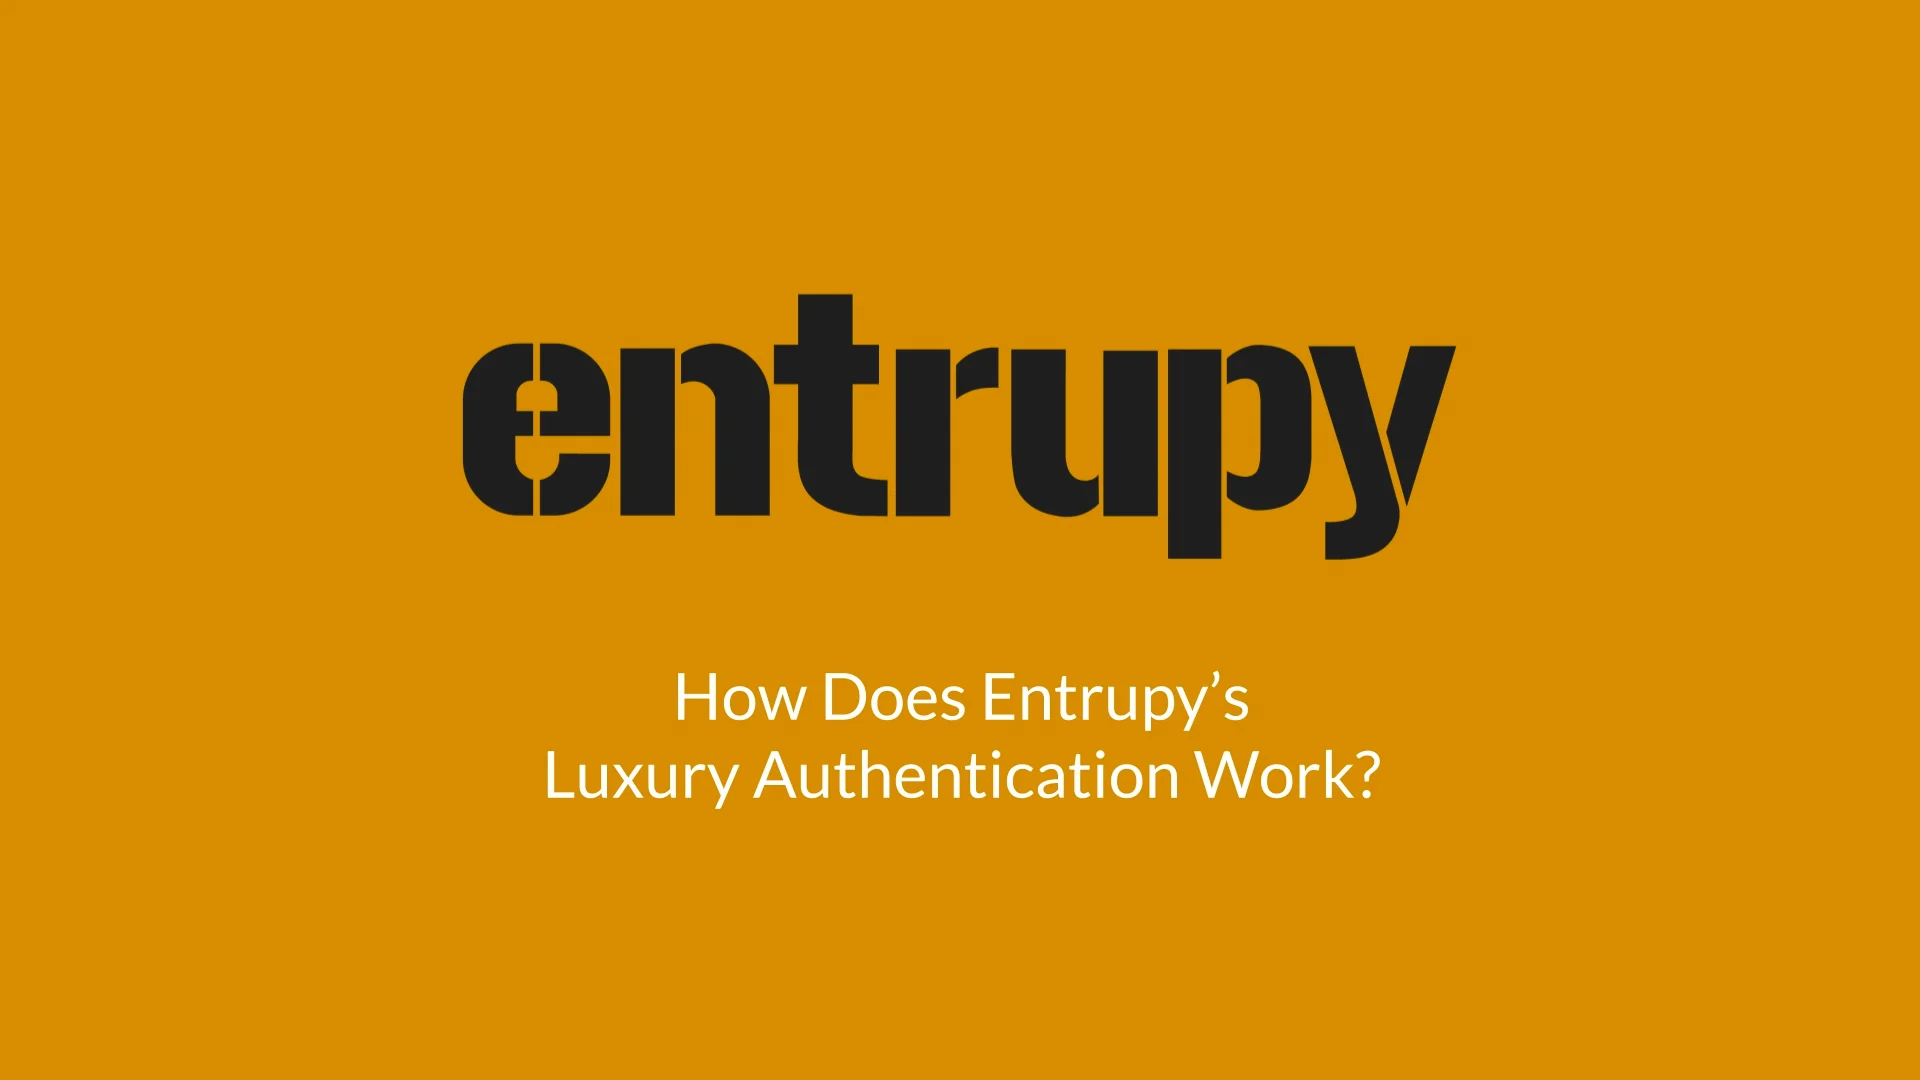 How to use Entrupy Luxury Authentication on Vimeo